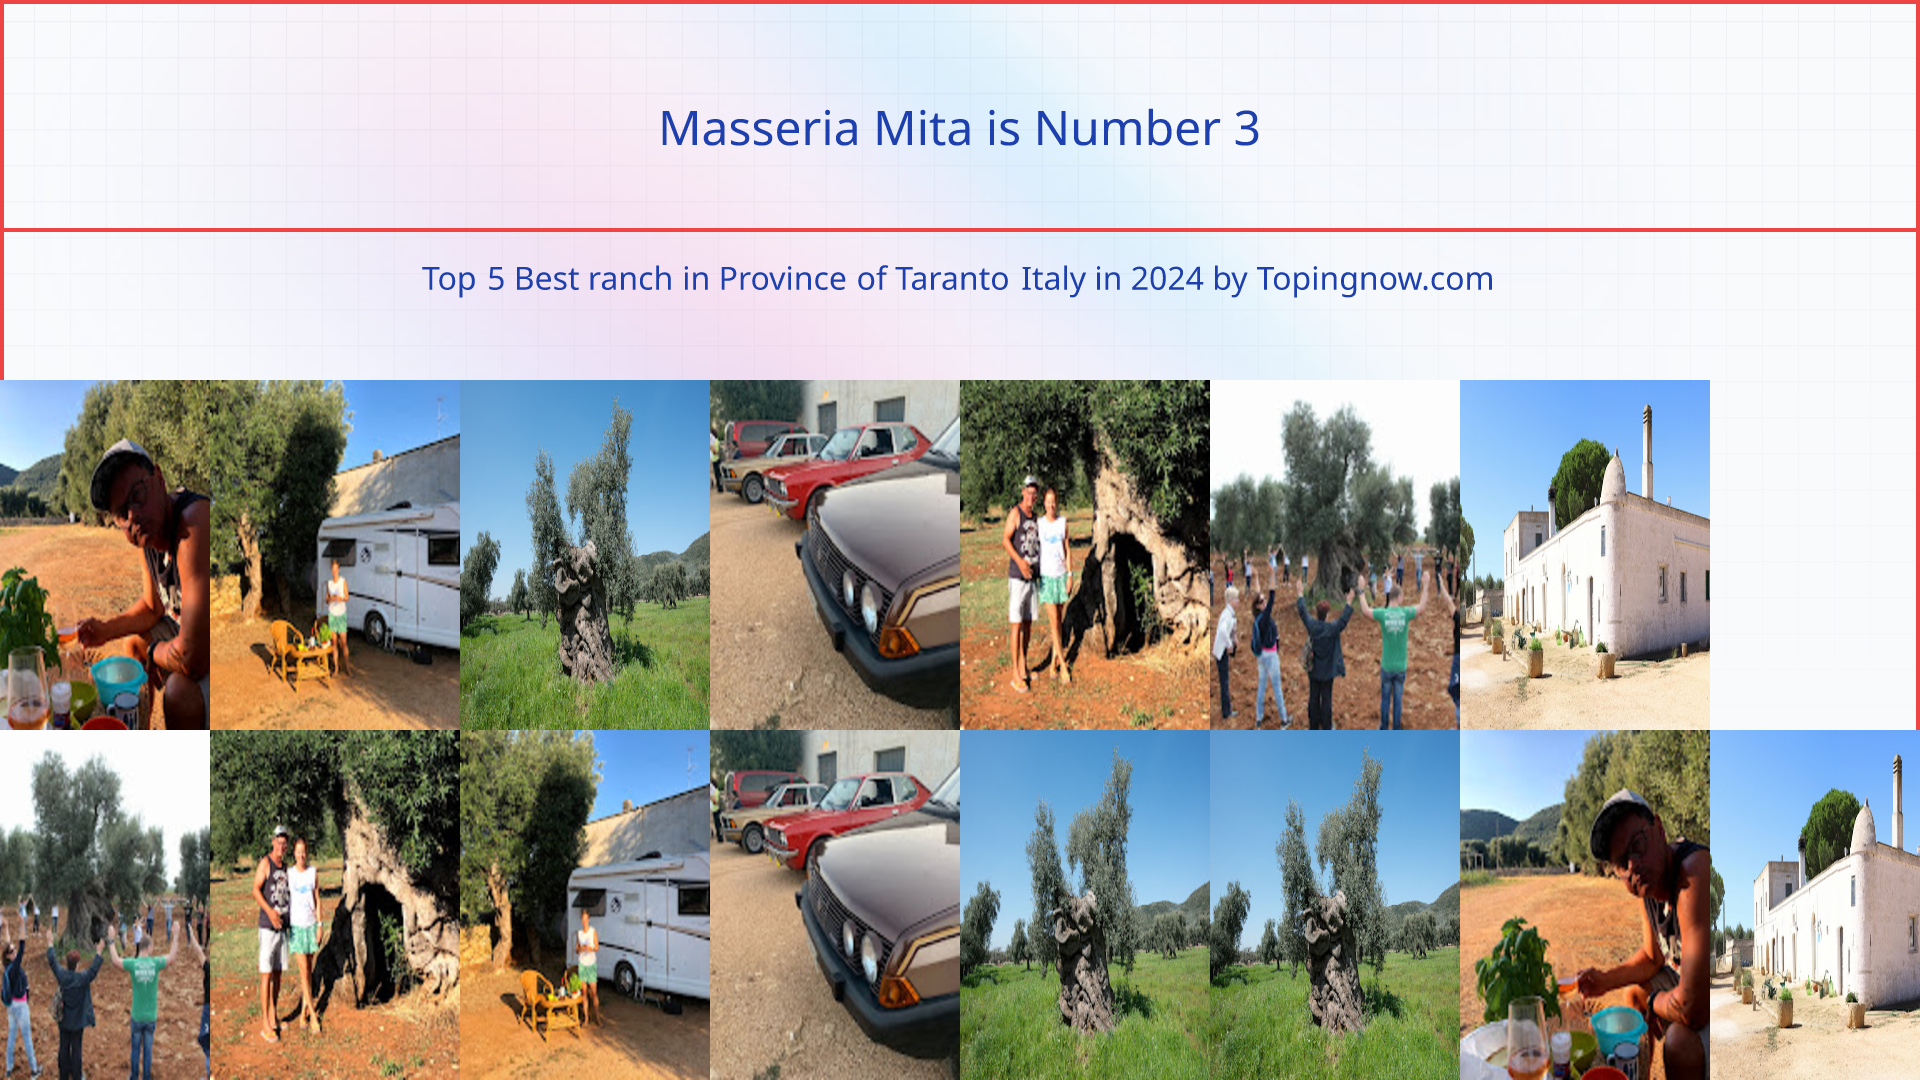 Masseria Mita: Top 5 Best ranch in Province of Taranto Italy in 2024